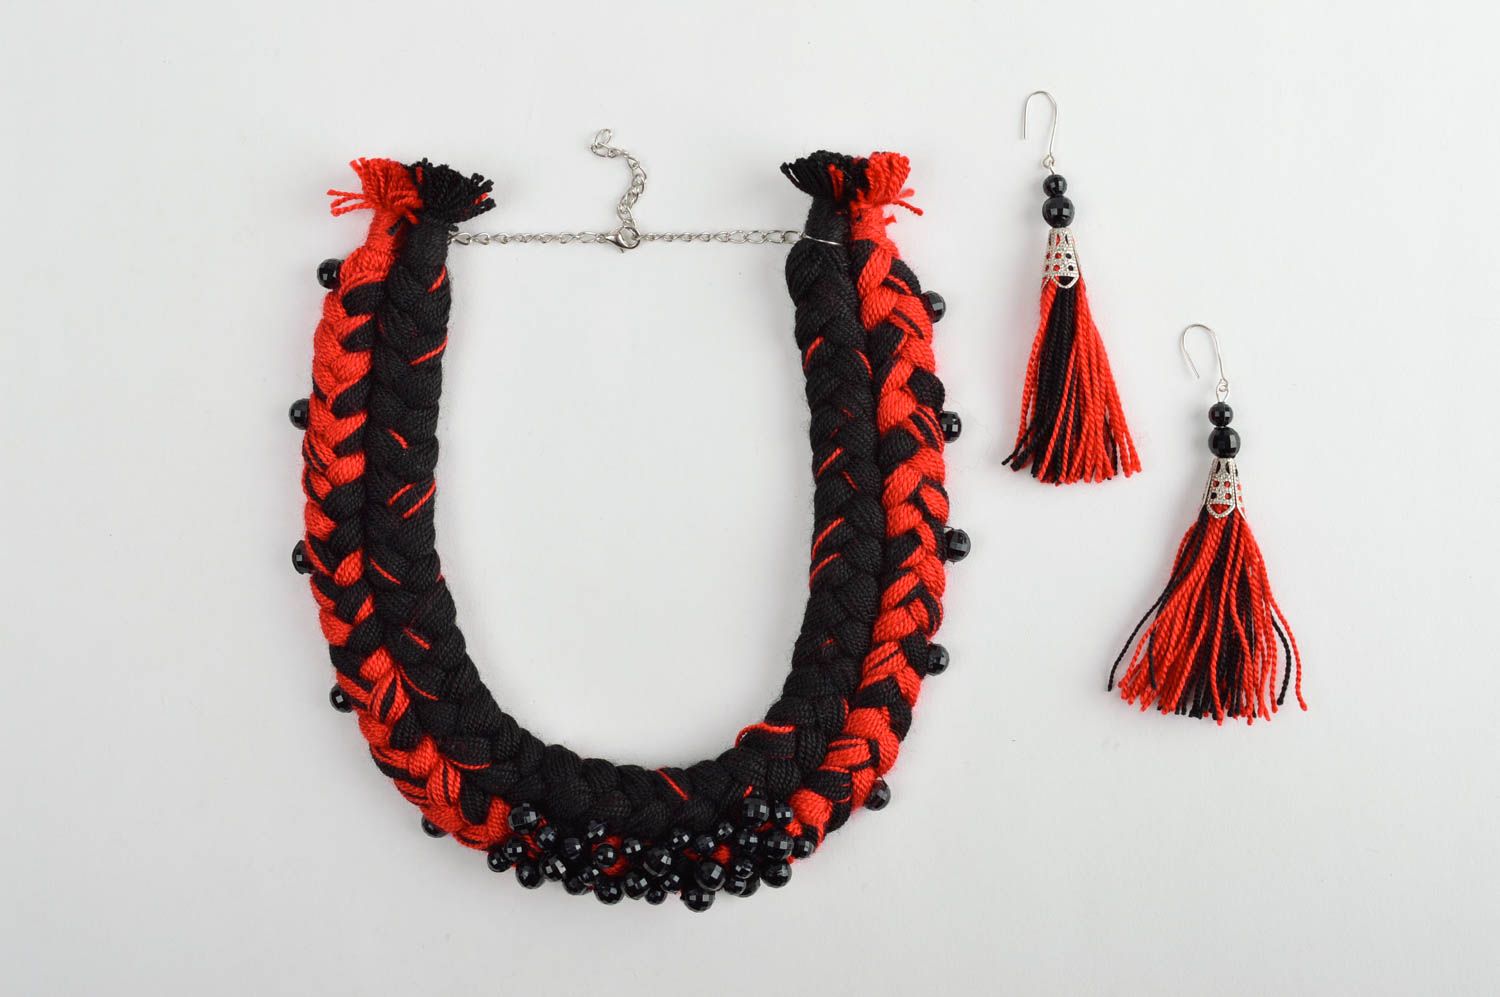 Textile unusual necklace handmade stylish accessories beautiful jewelry photo 2